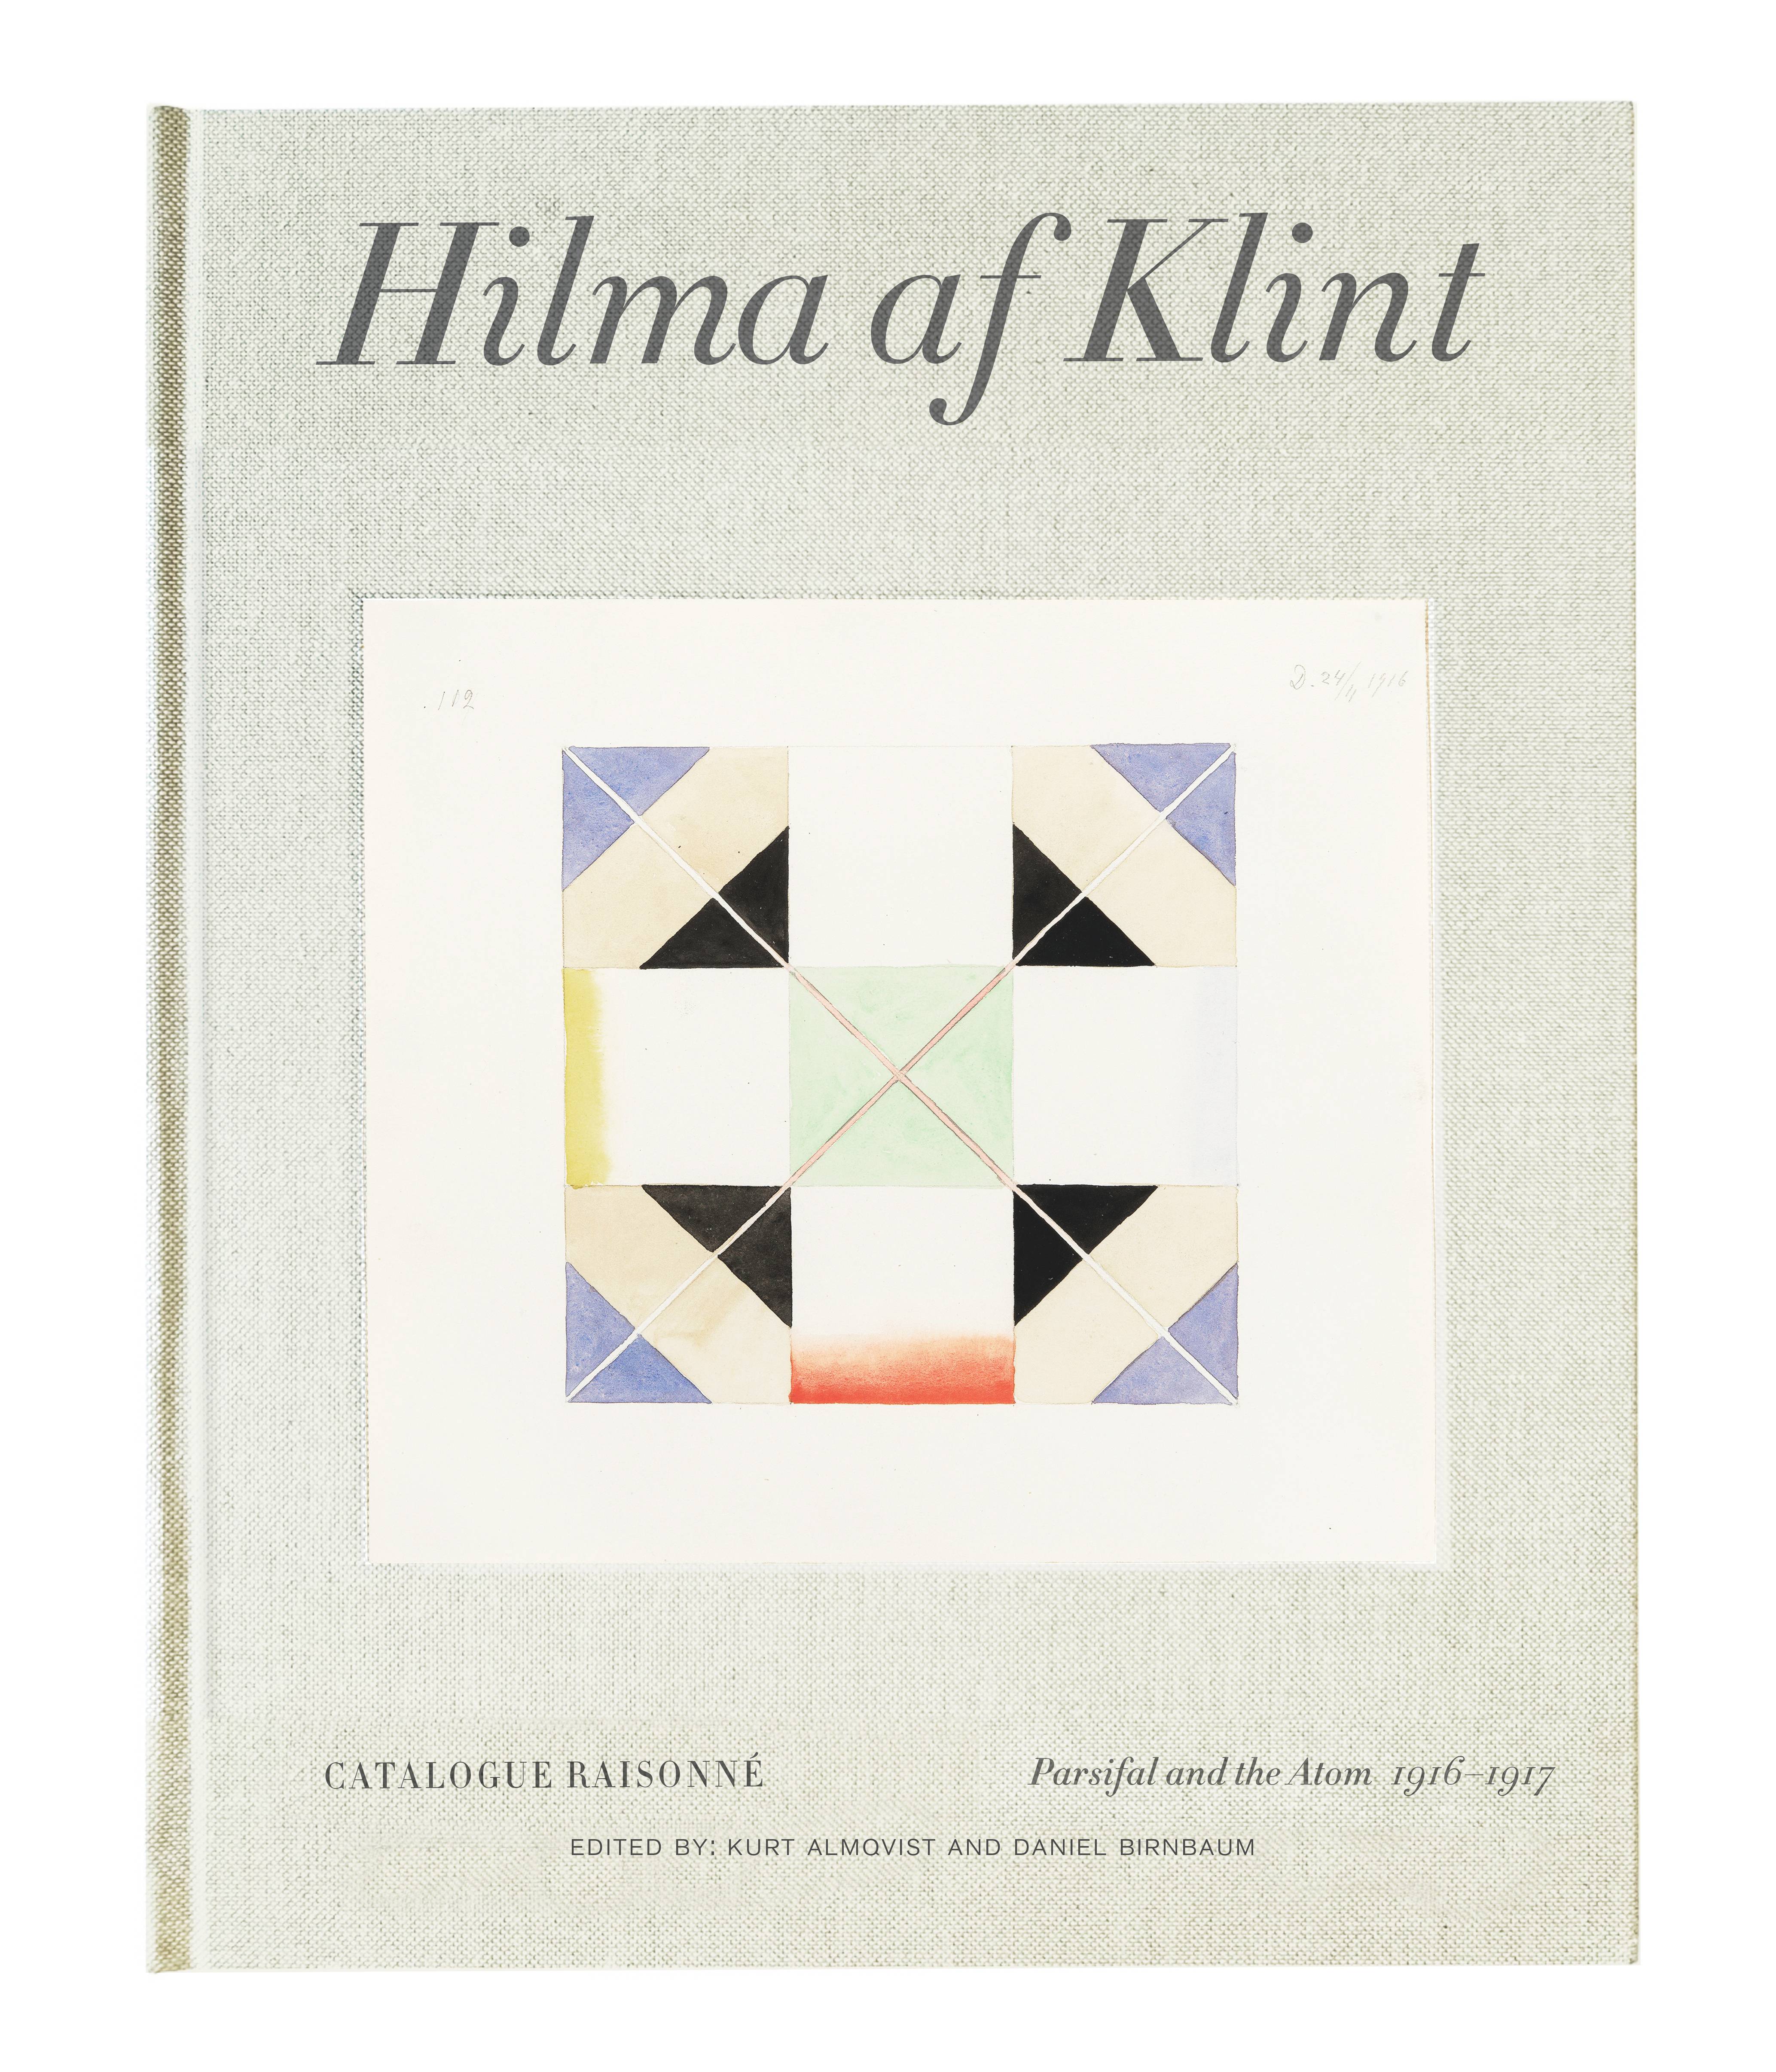 Hilma af Klint : Parsifal and the atom 1916-1917